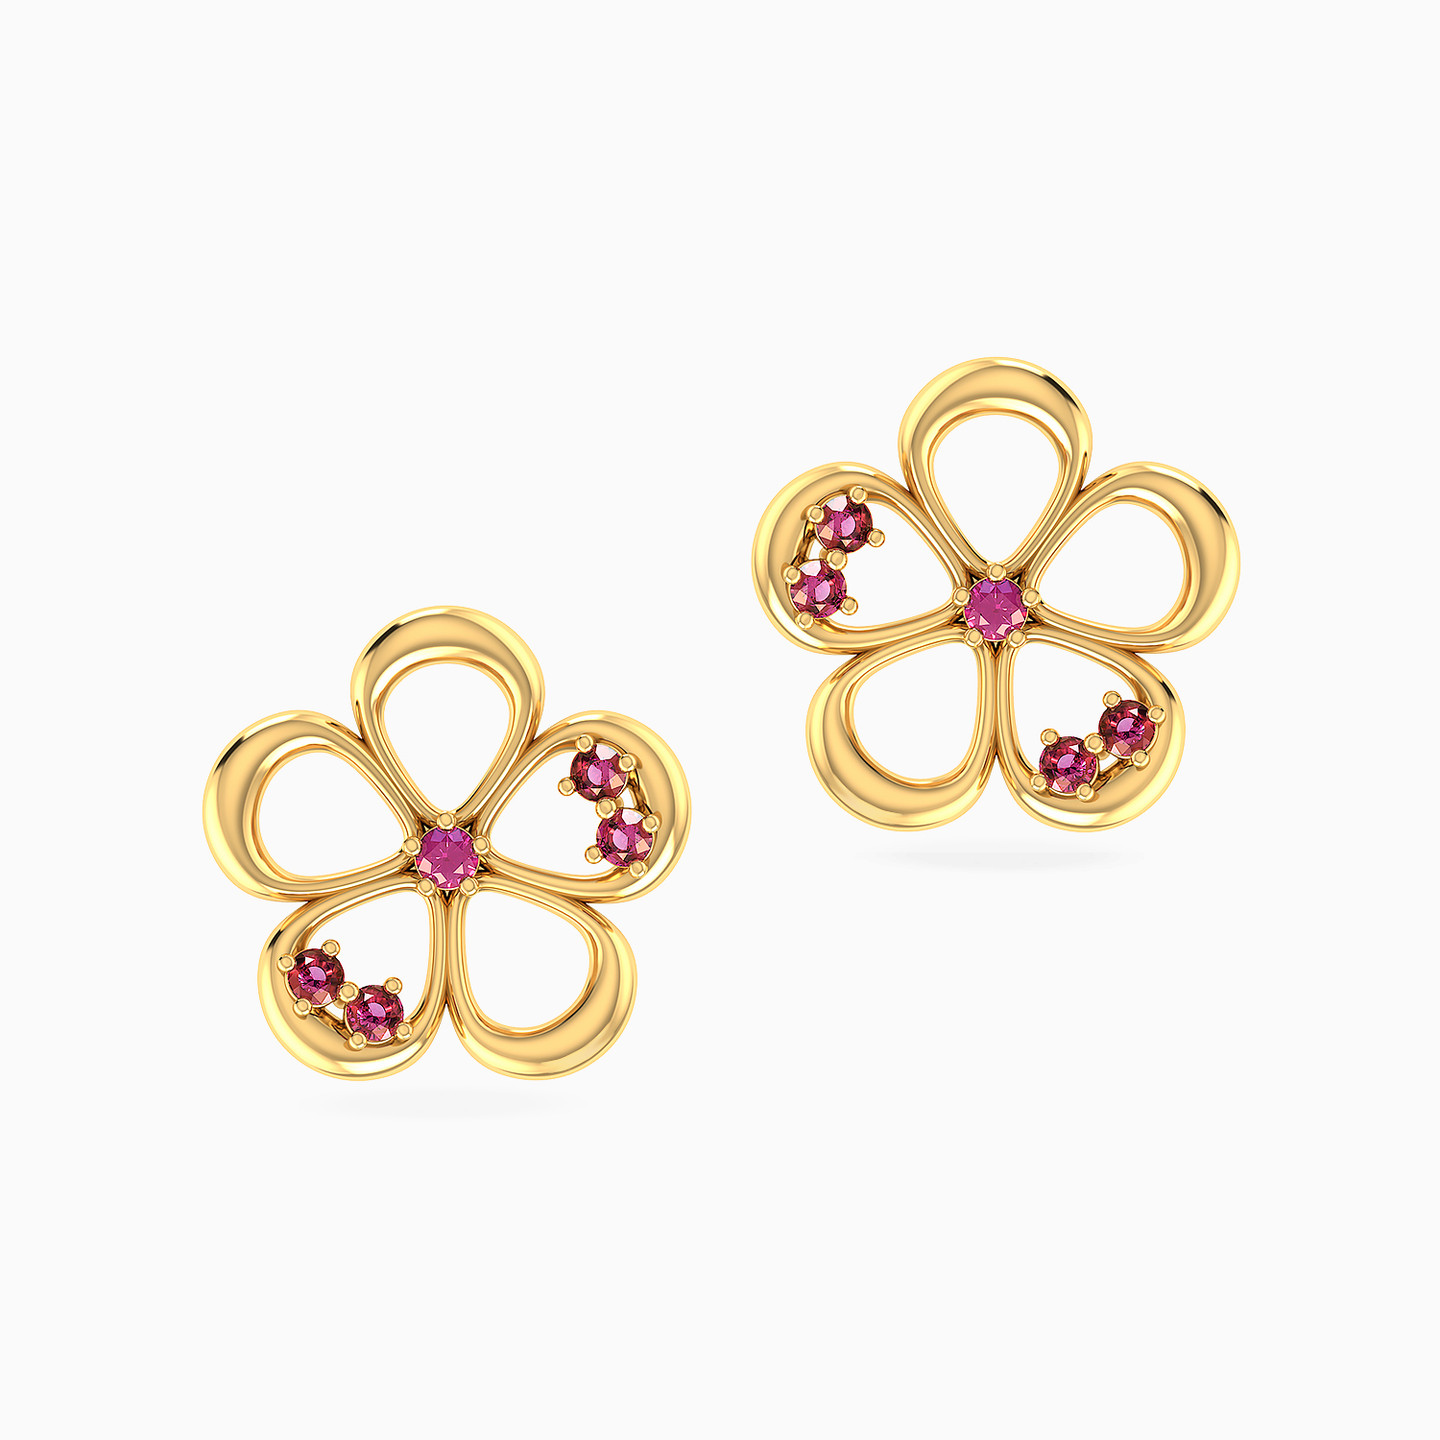 Flower Shaped Colored Stones Stud Earrings in 18K Gold